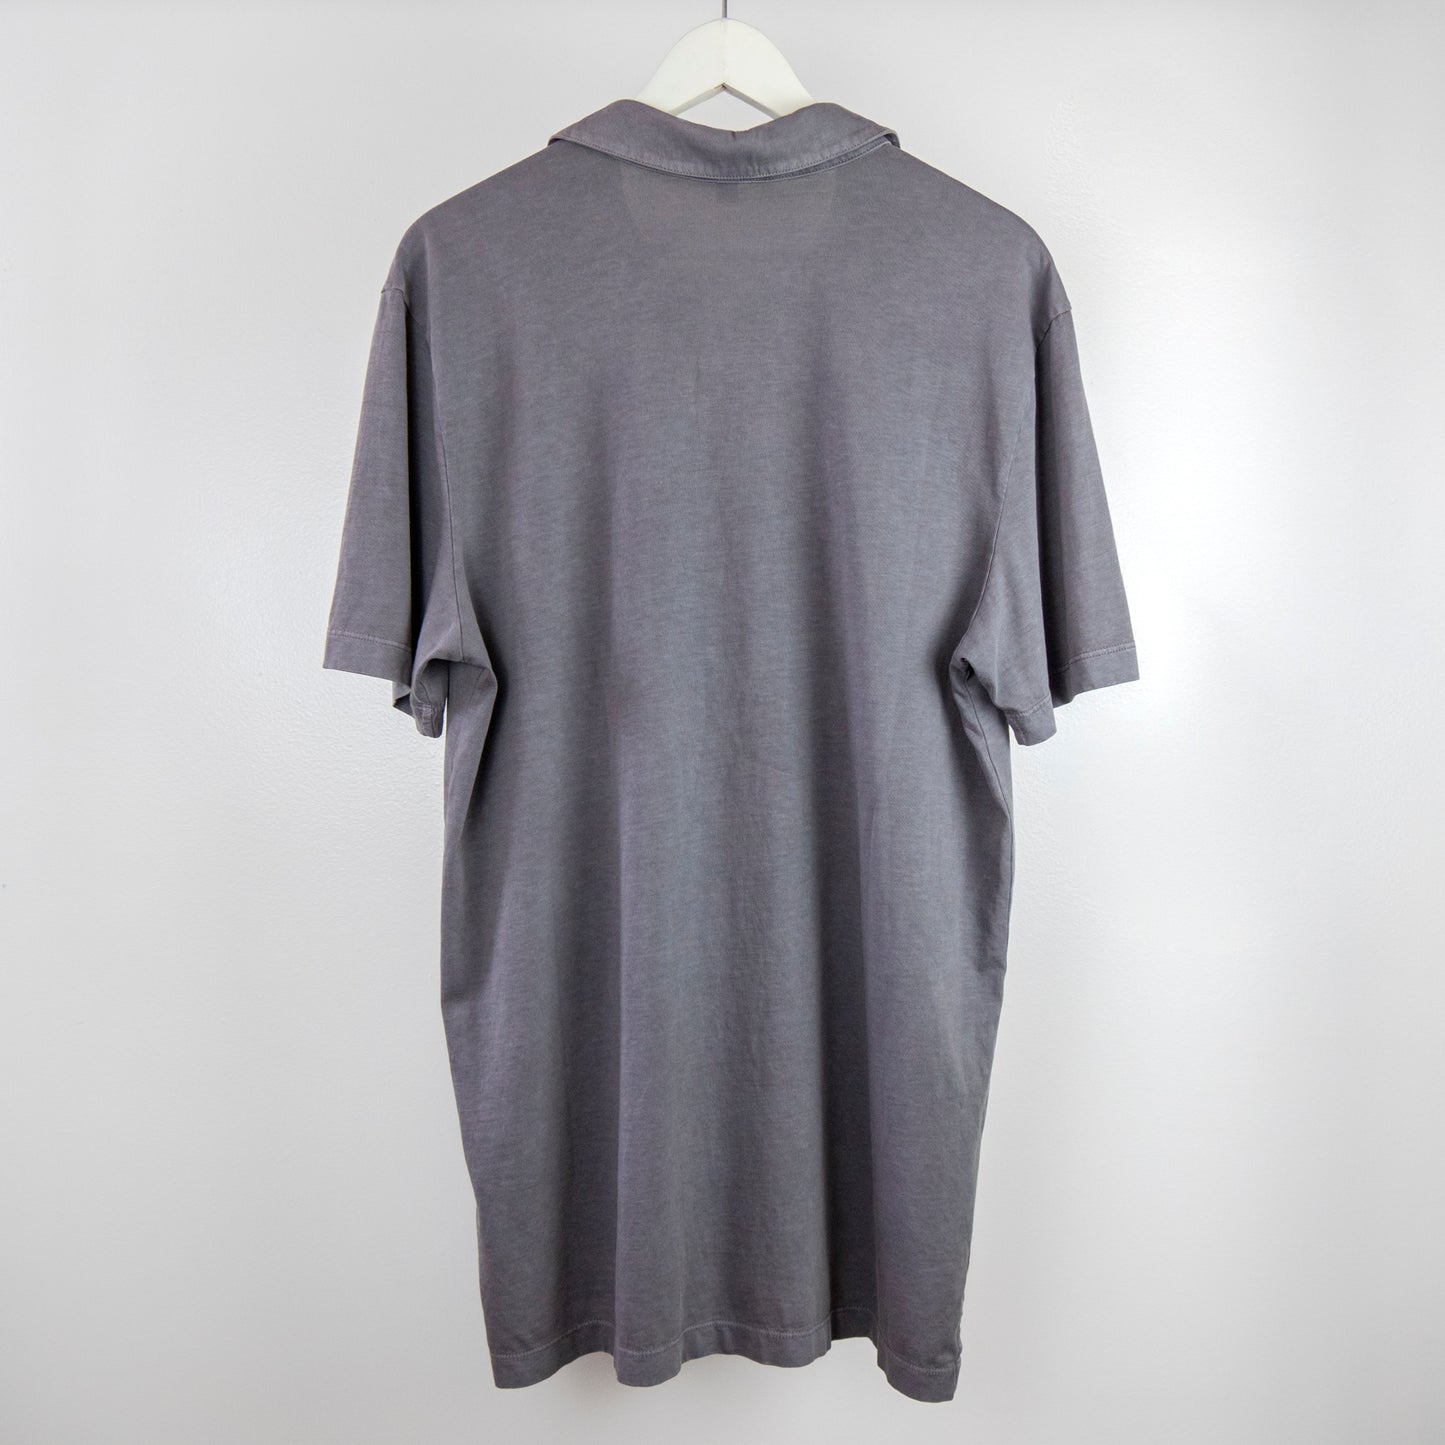 James Perse - Classic Linen Shirt - Flannel Pigment